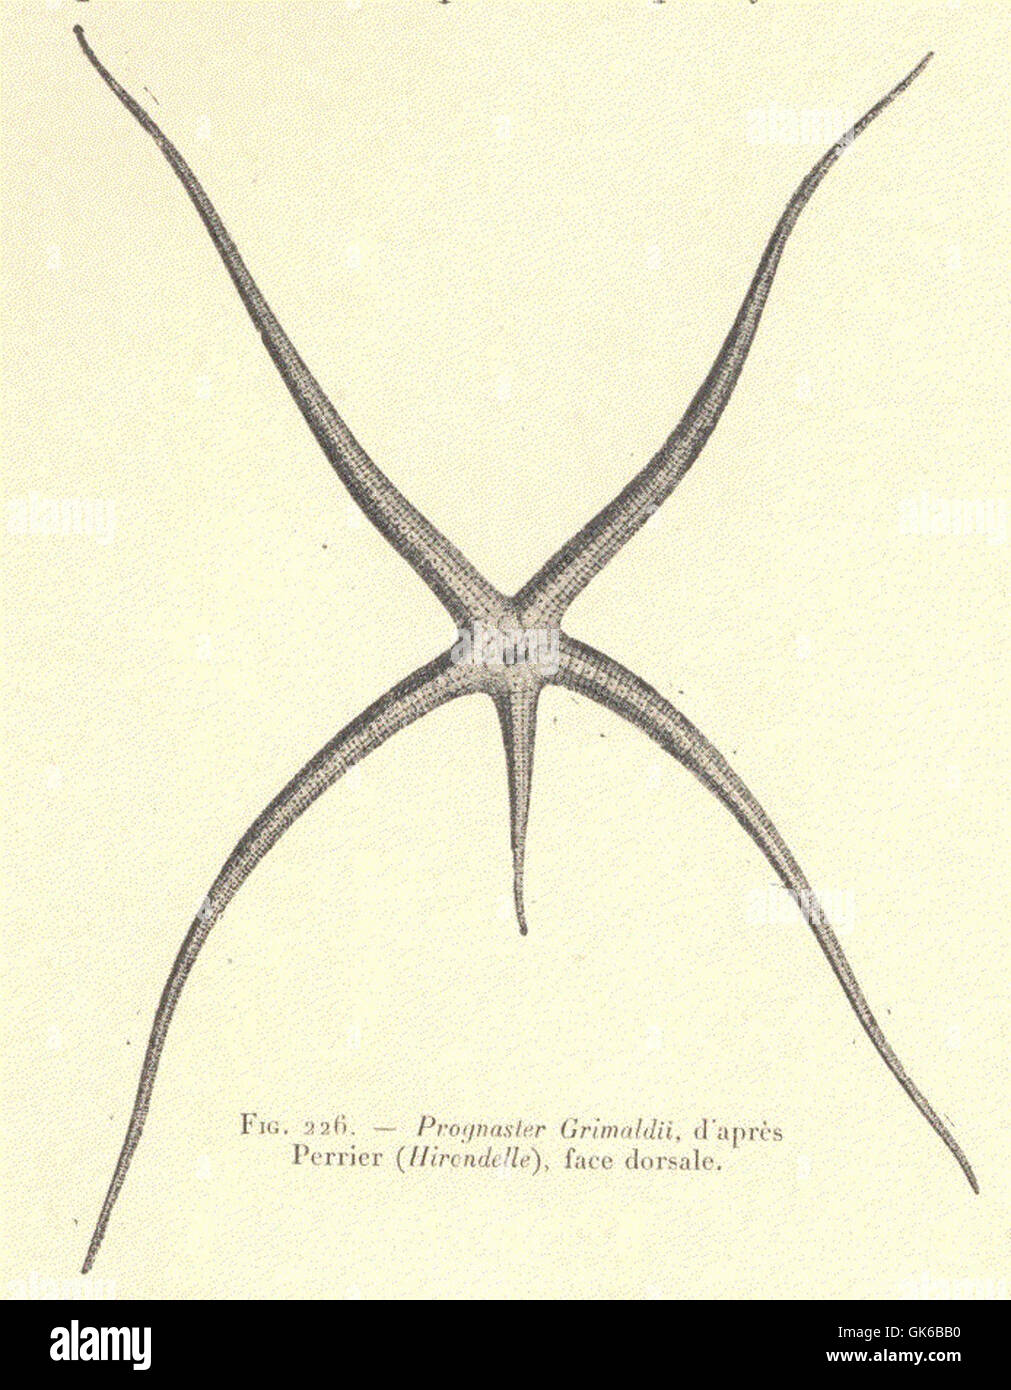 53309 Progenaster Grimaldii, d'apres Perrier (Hirondelle), facee dorsale Stock Photo